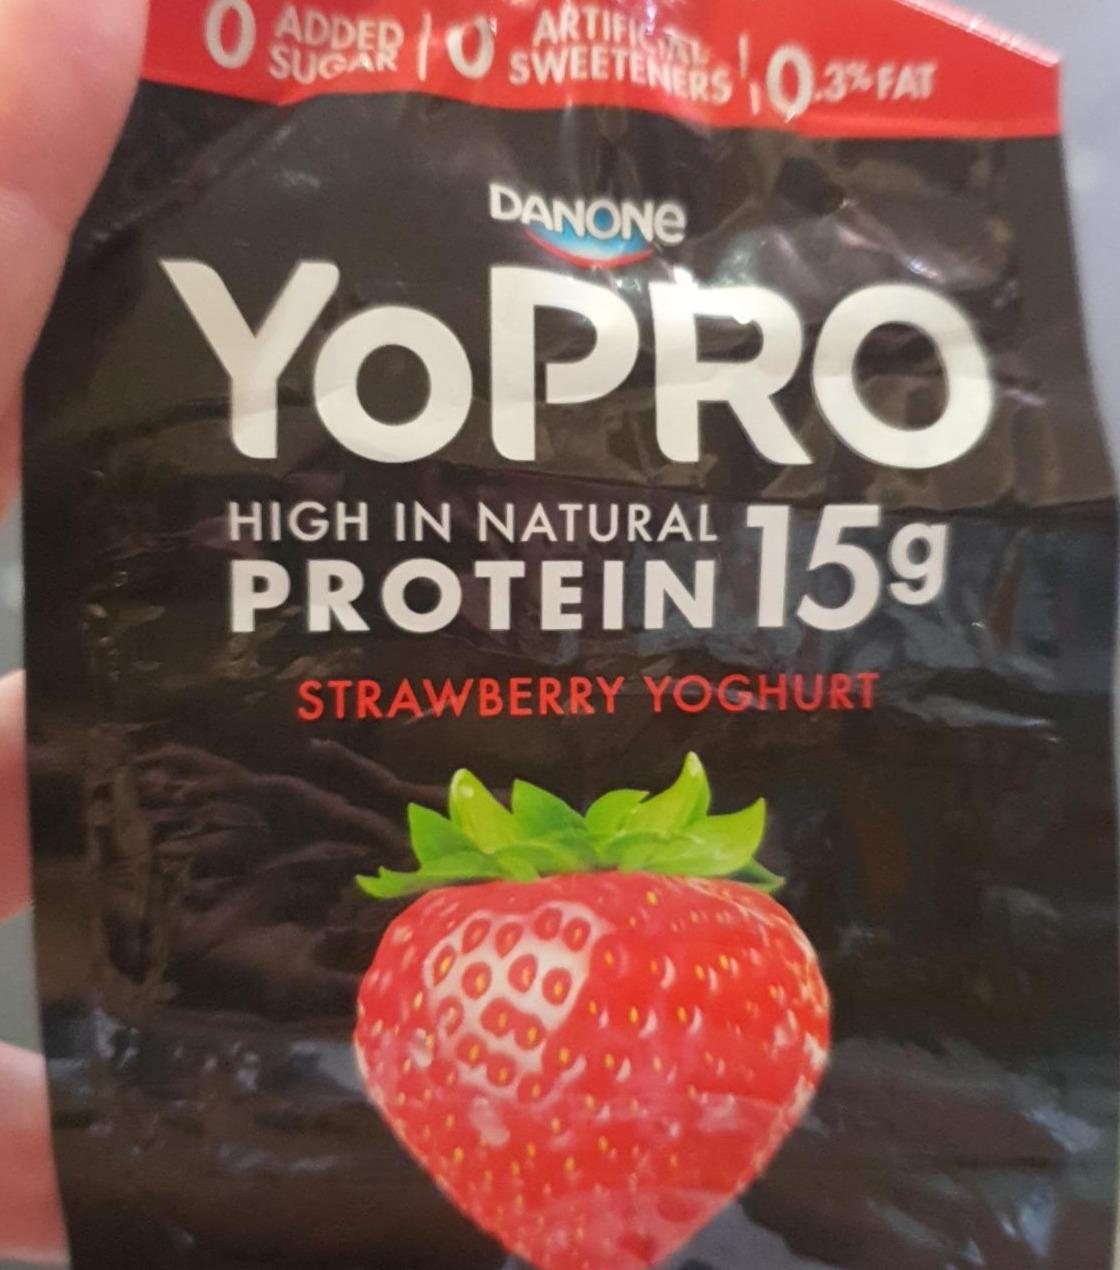 Fotografie - YoPro High in natural protein 15g Strawberry Yoghurt Danone